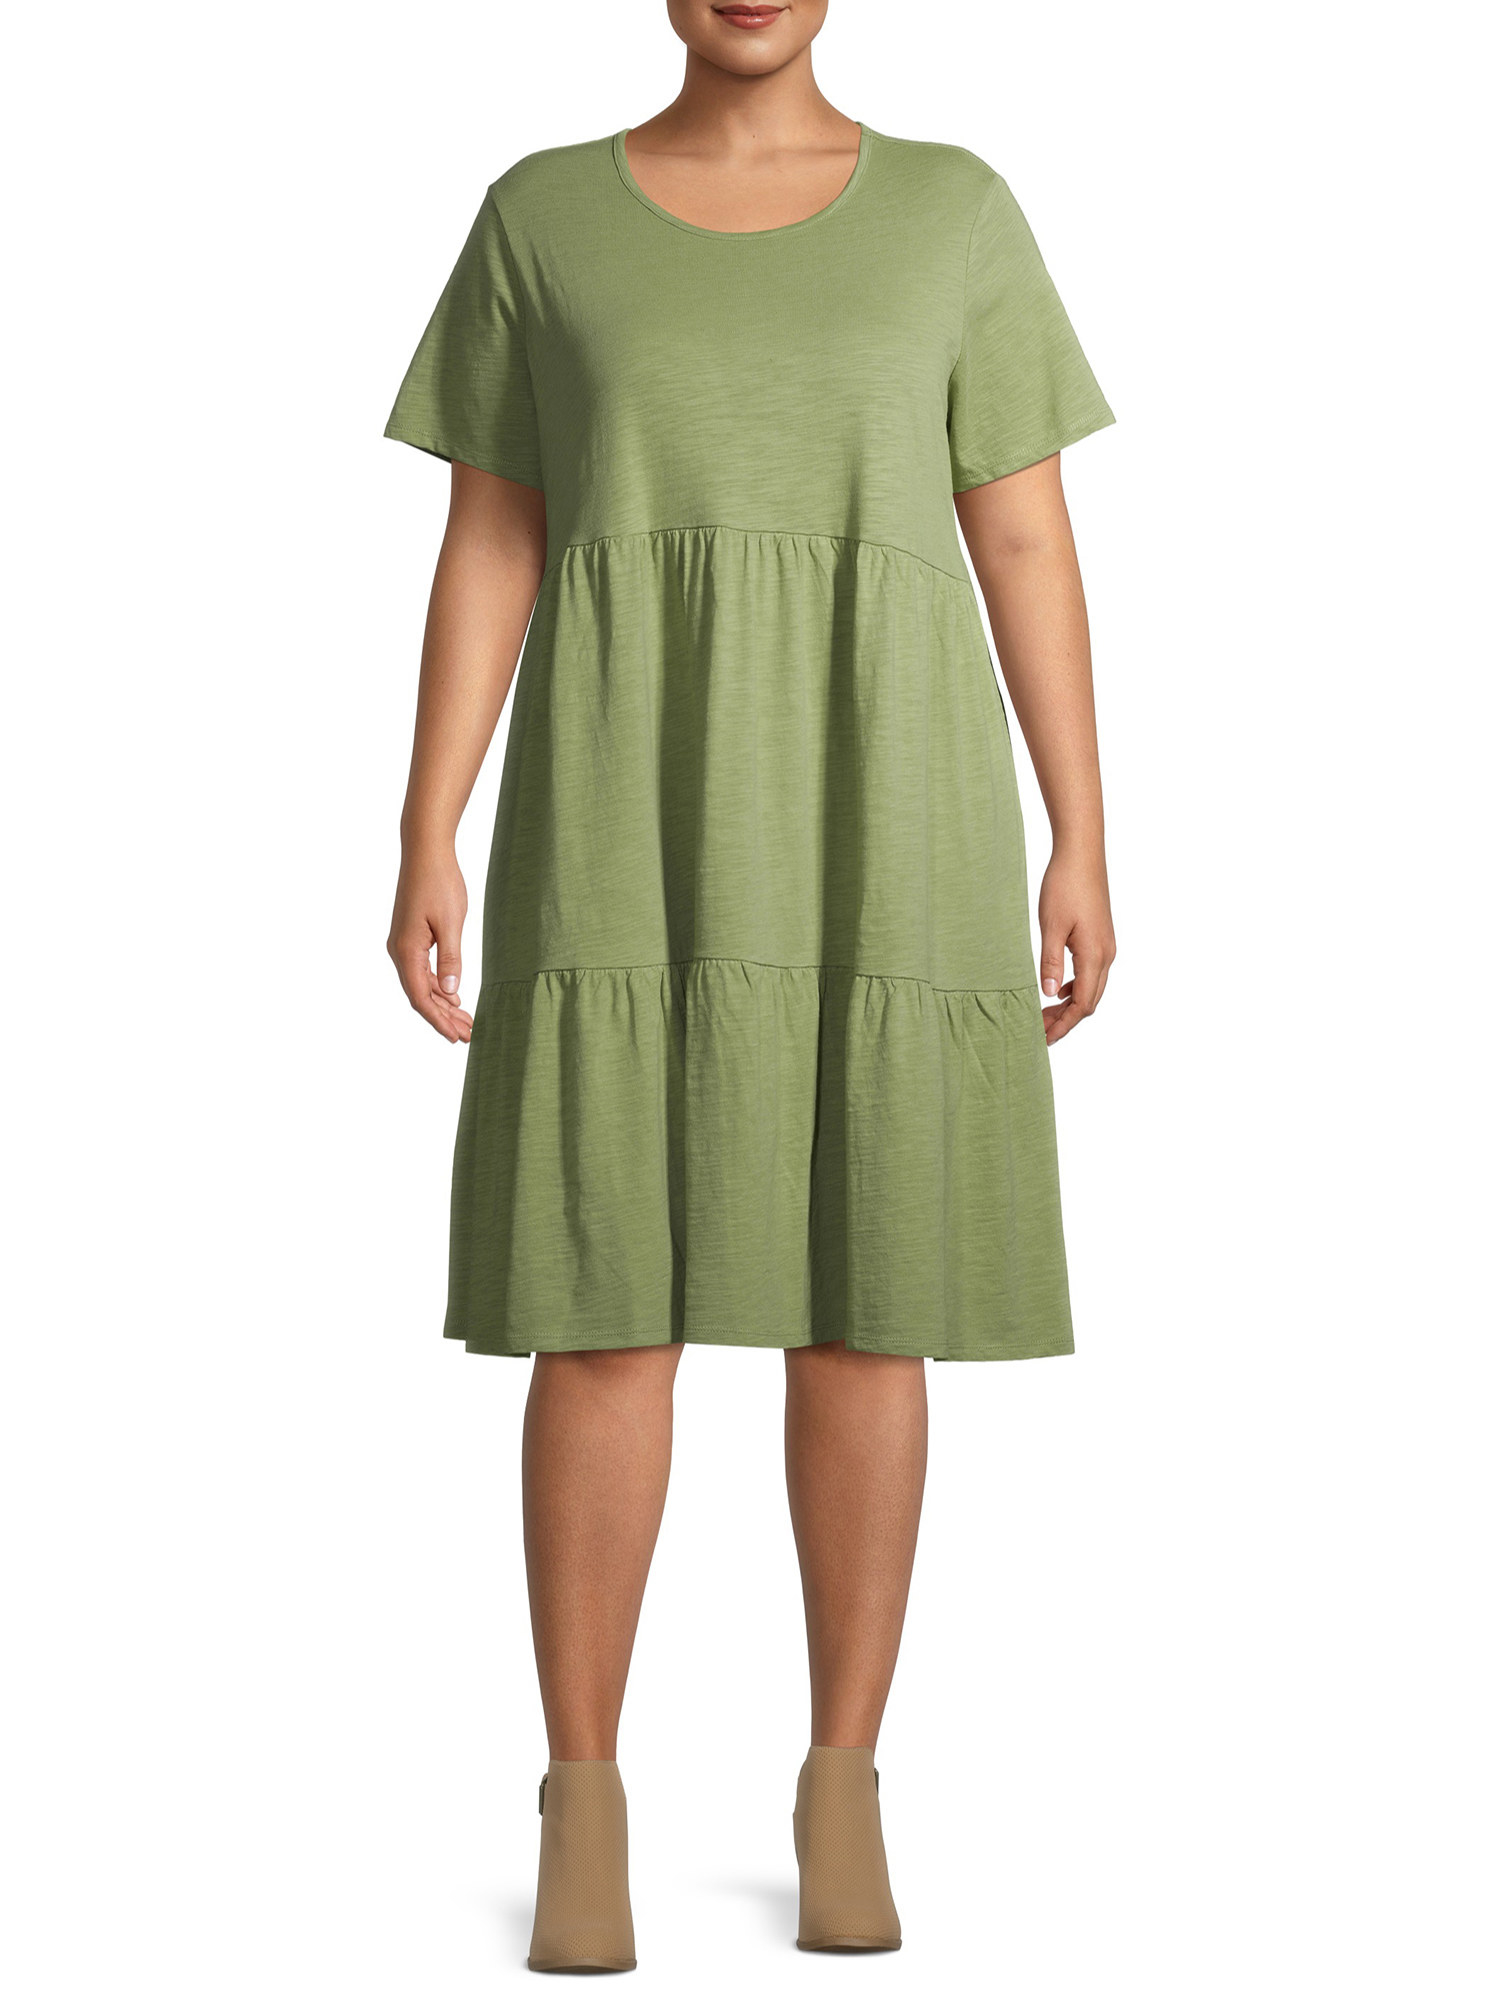 model wears olive green tiered t shirt dress